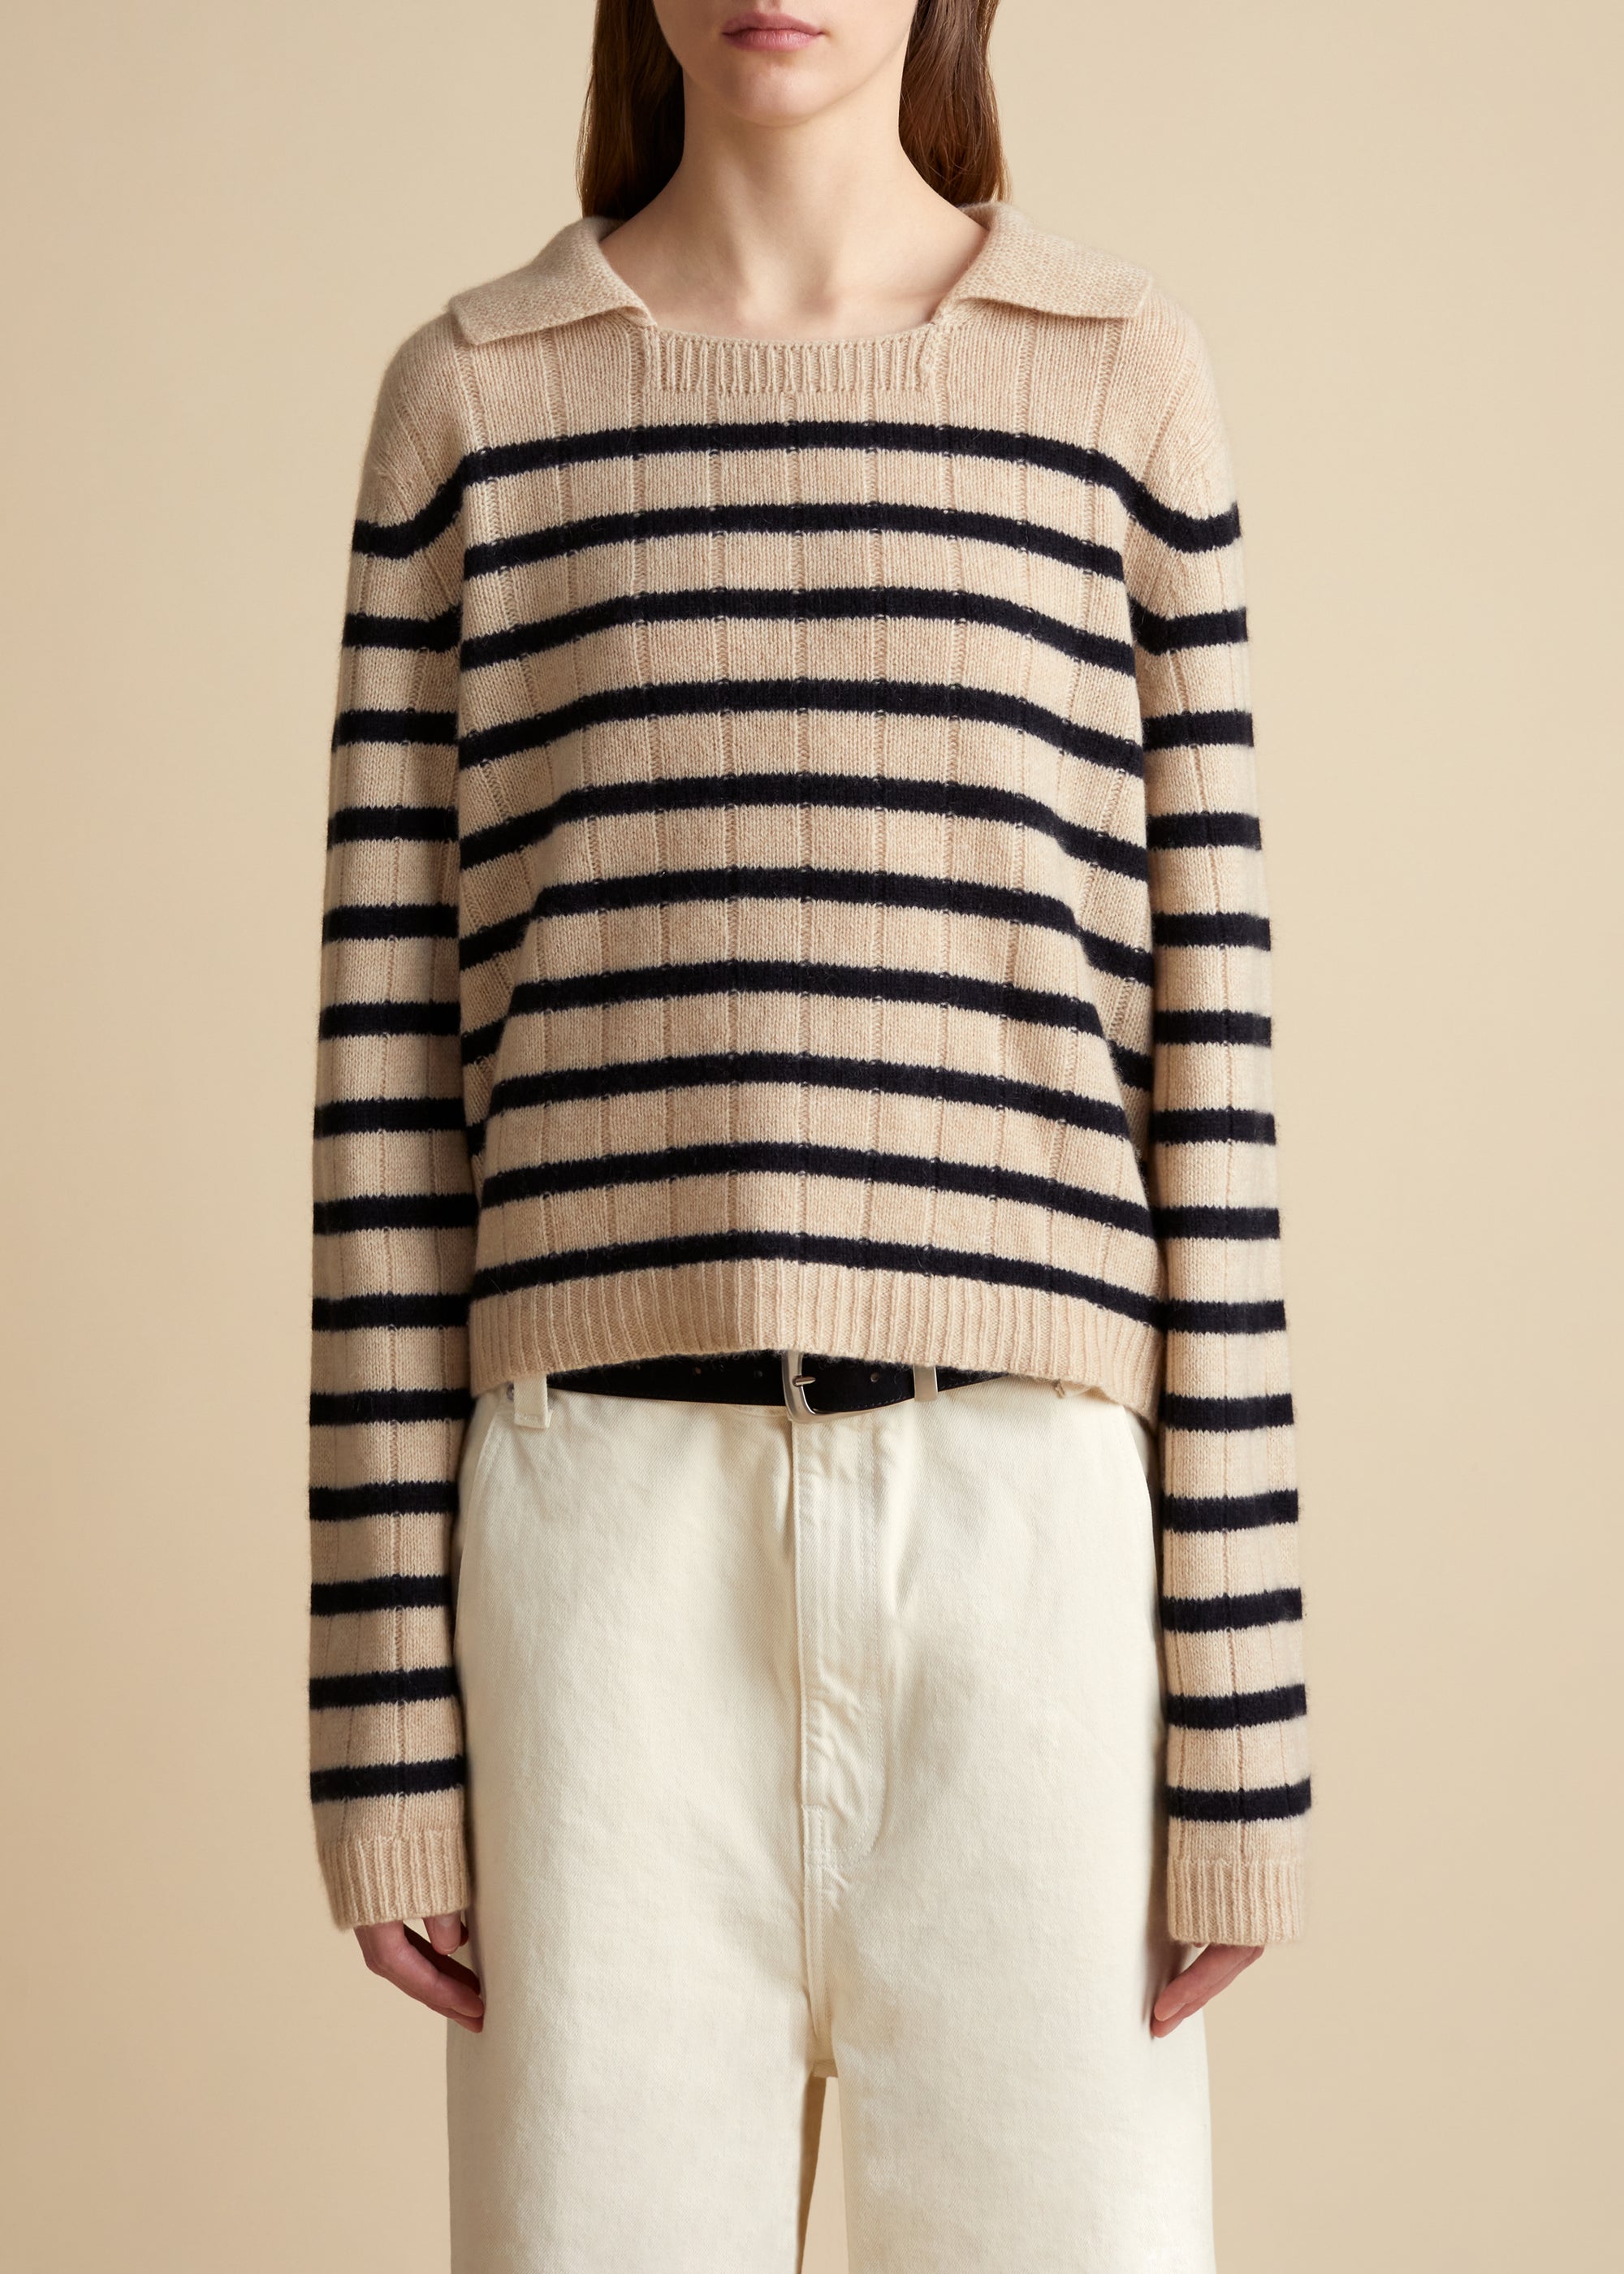 Mateo sweater in cashmere - Butter & Black Stripe